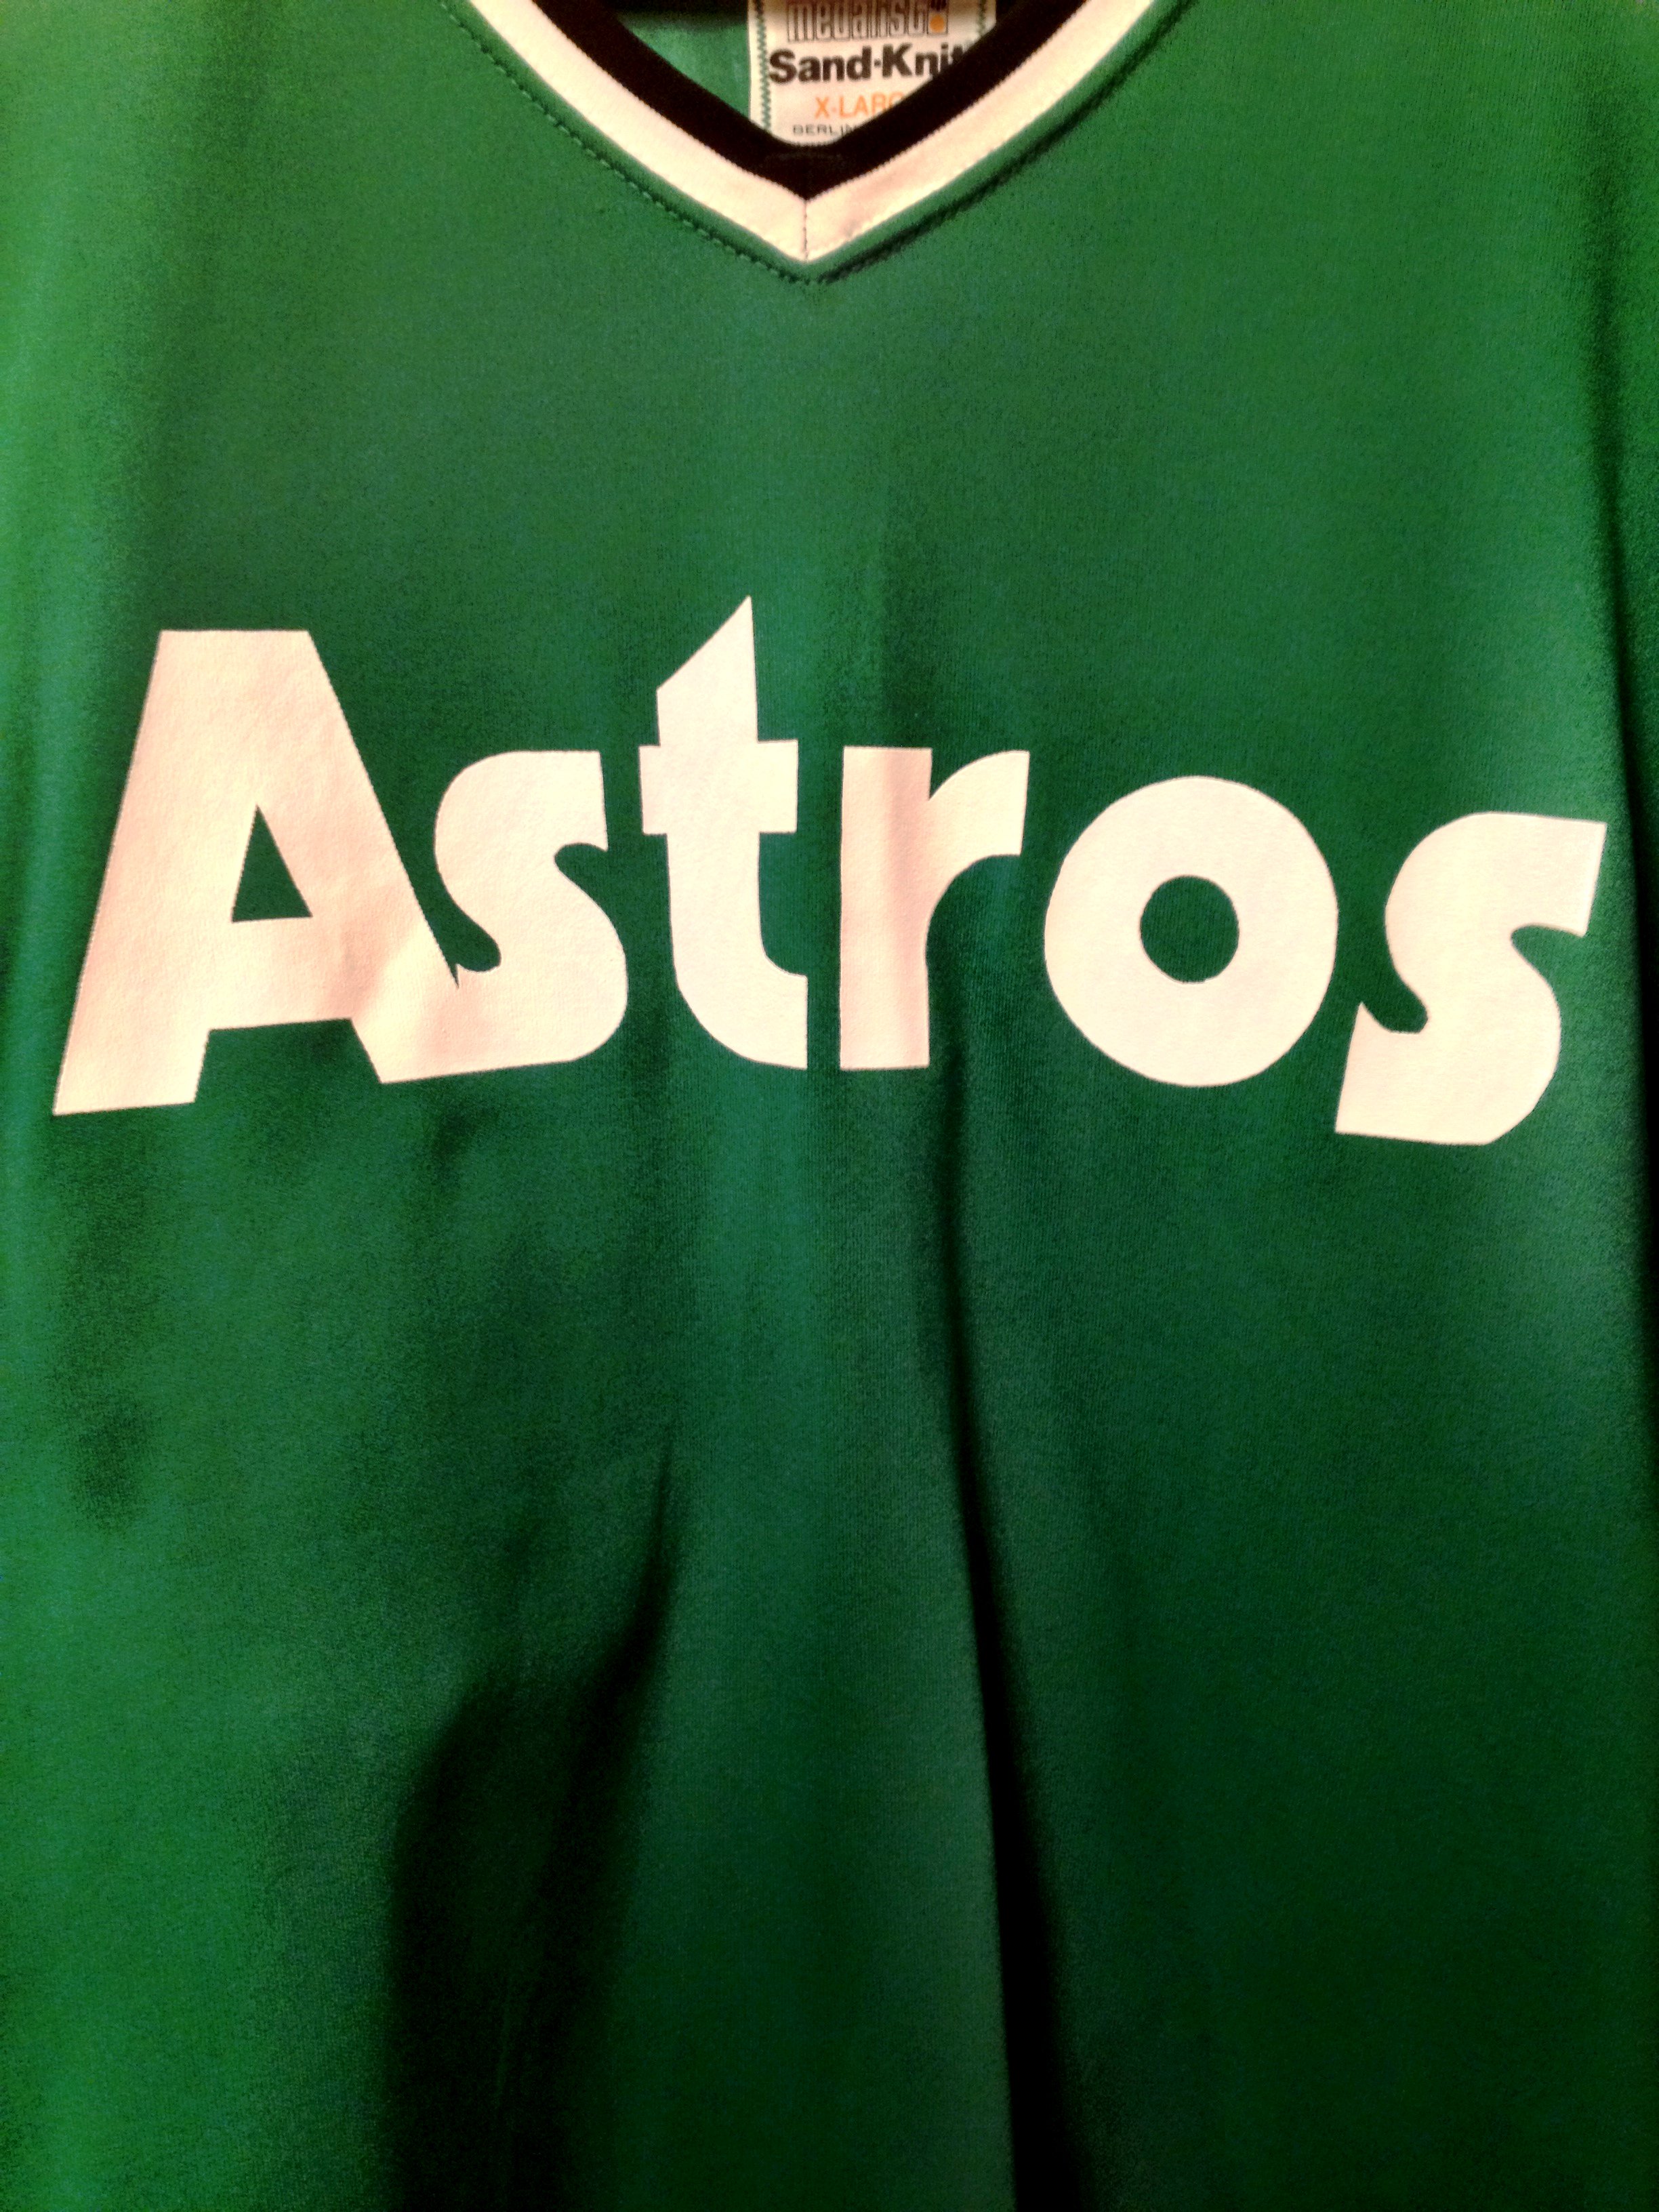 astros green jersey